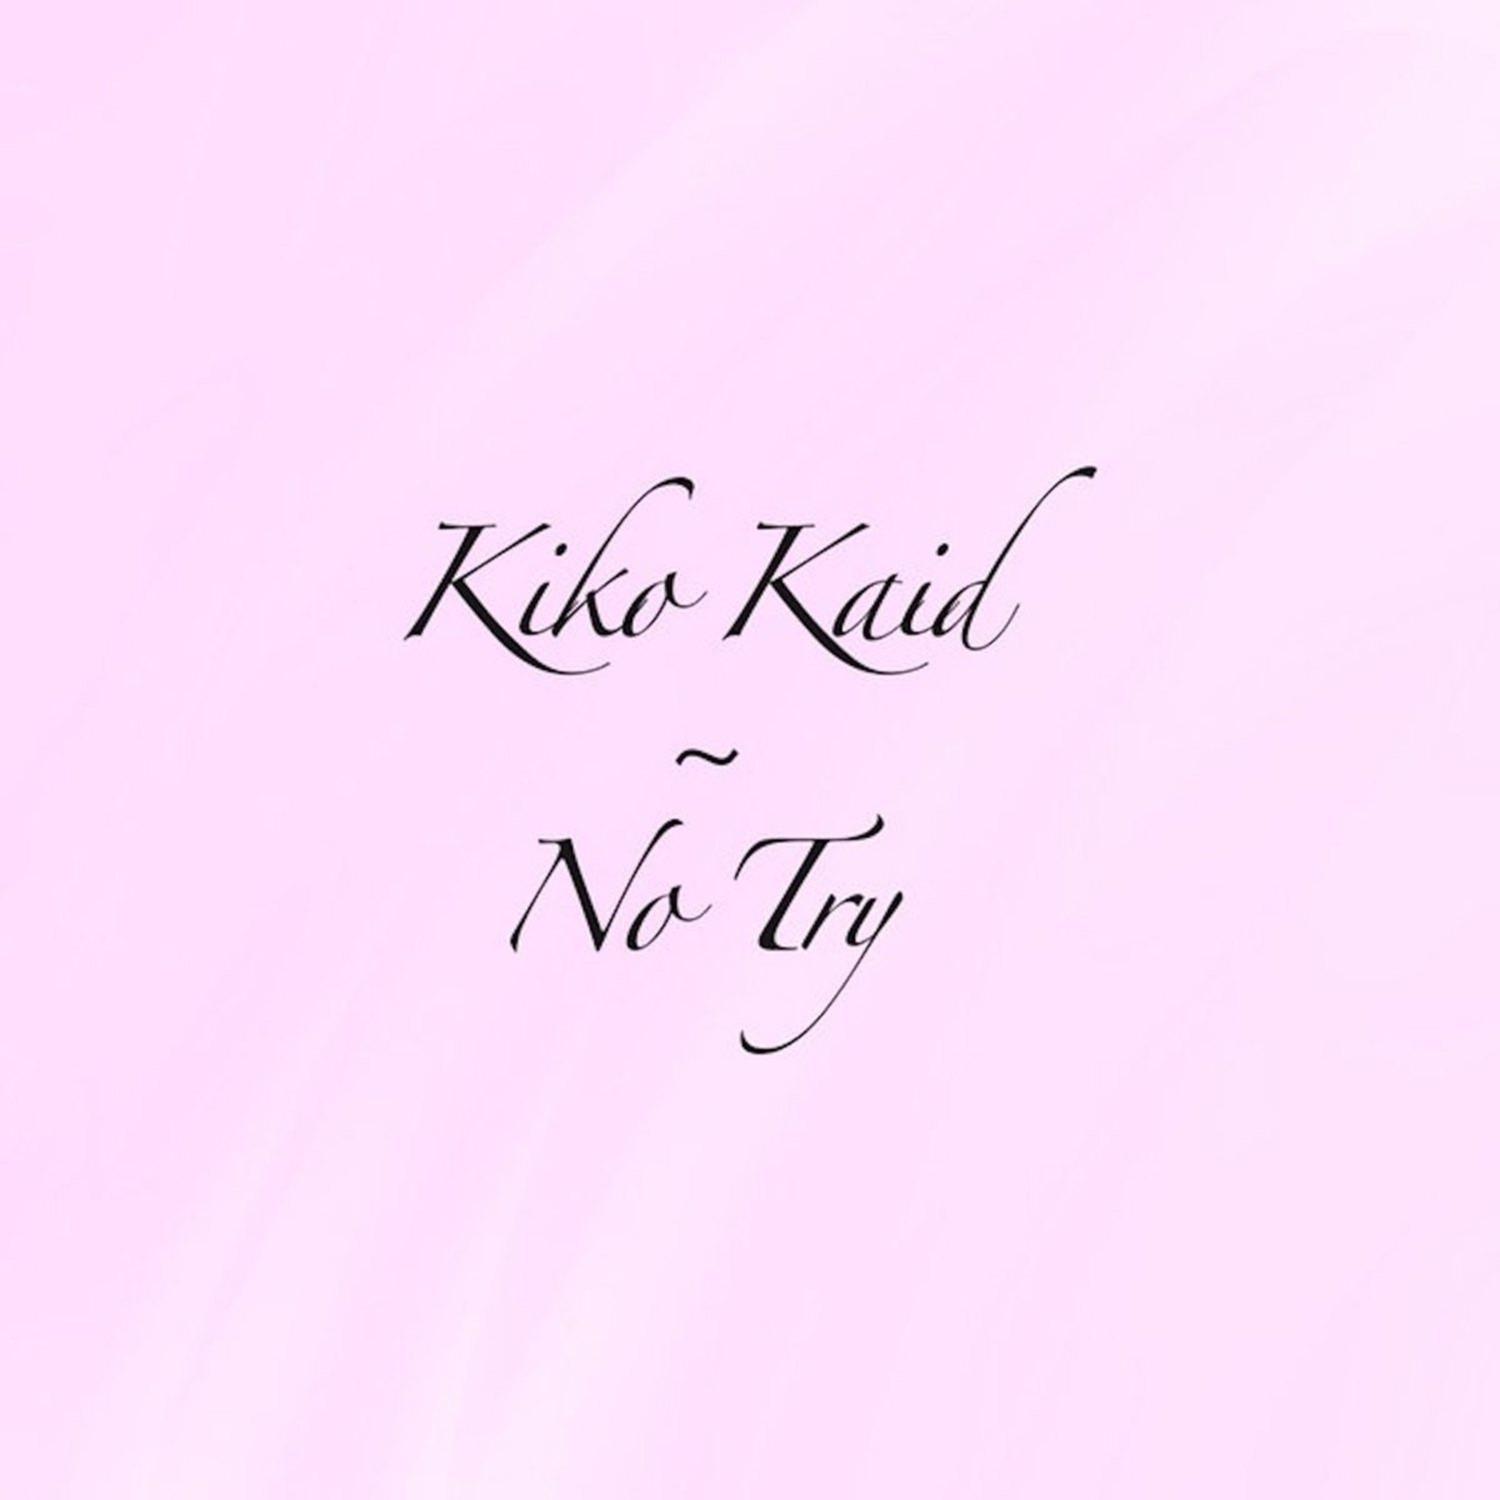 Kiko Kaid - No Try